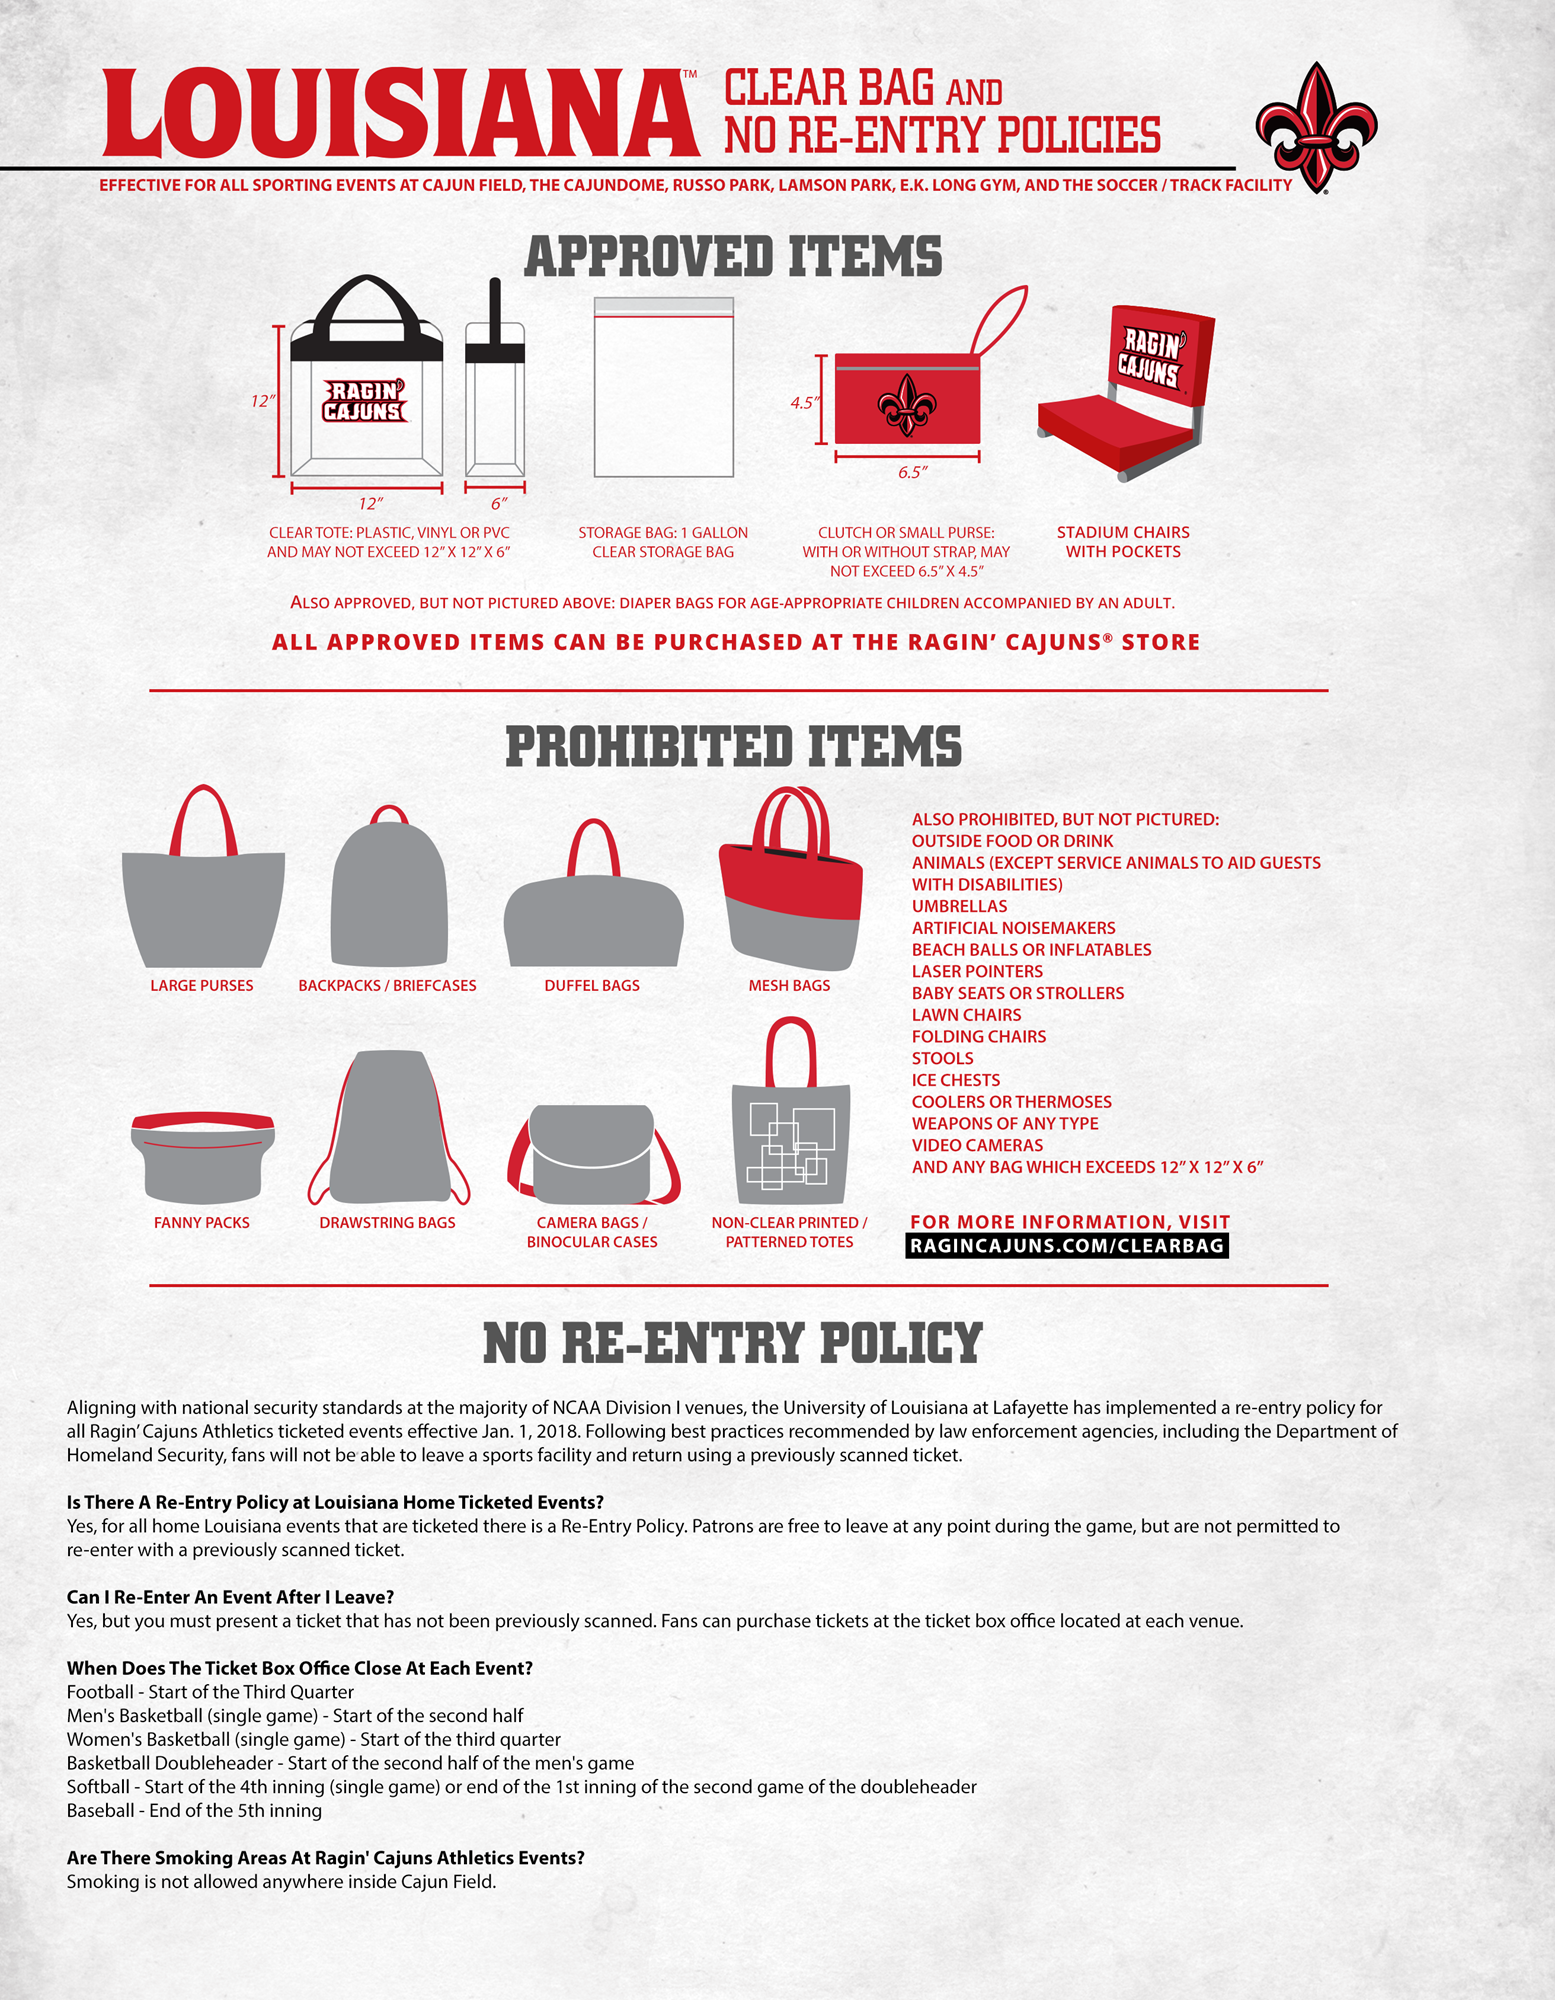 Cotton Bowl Stadium Bag Policy –